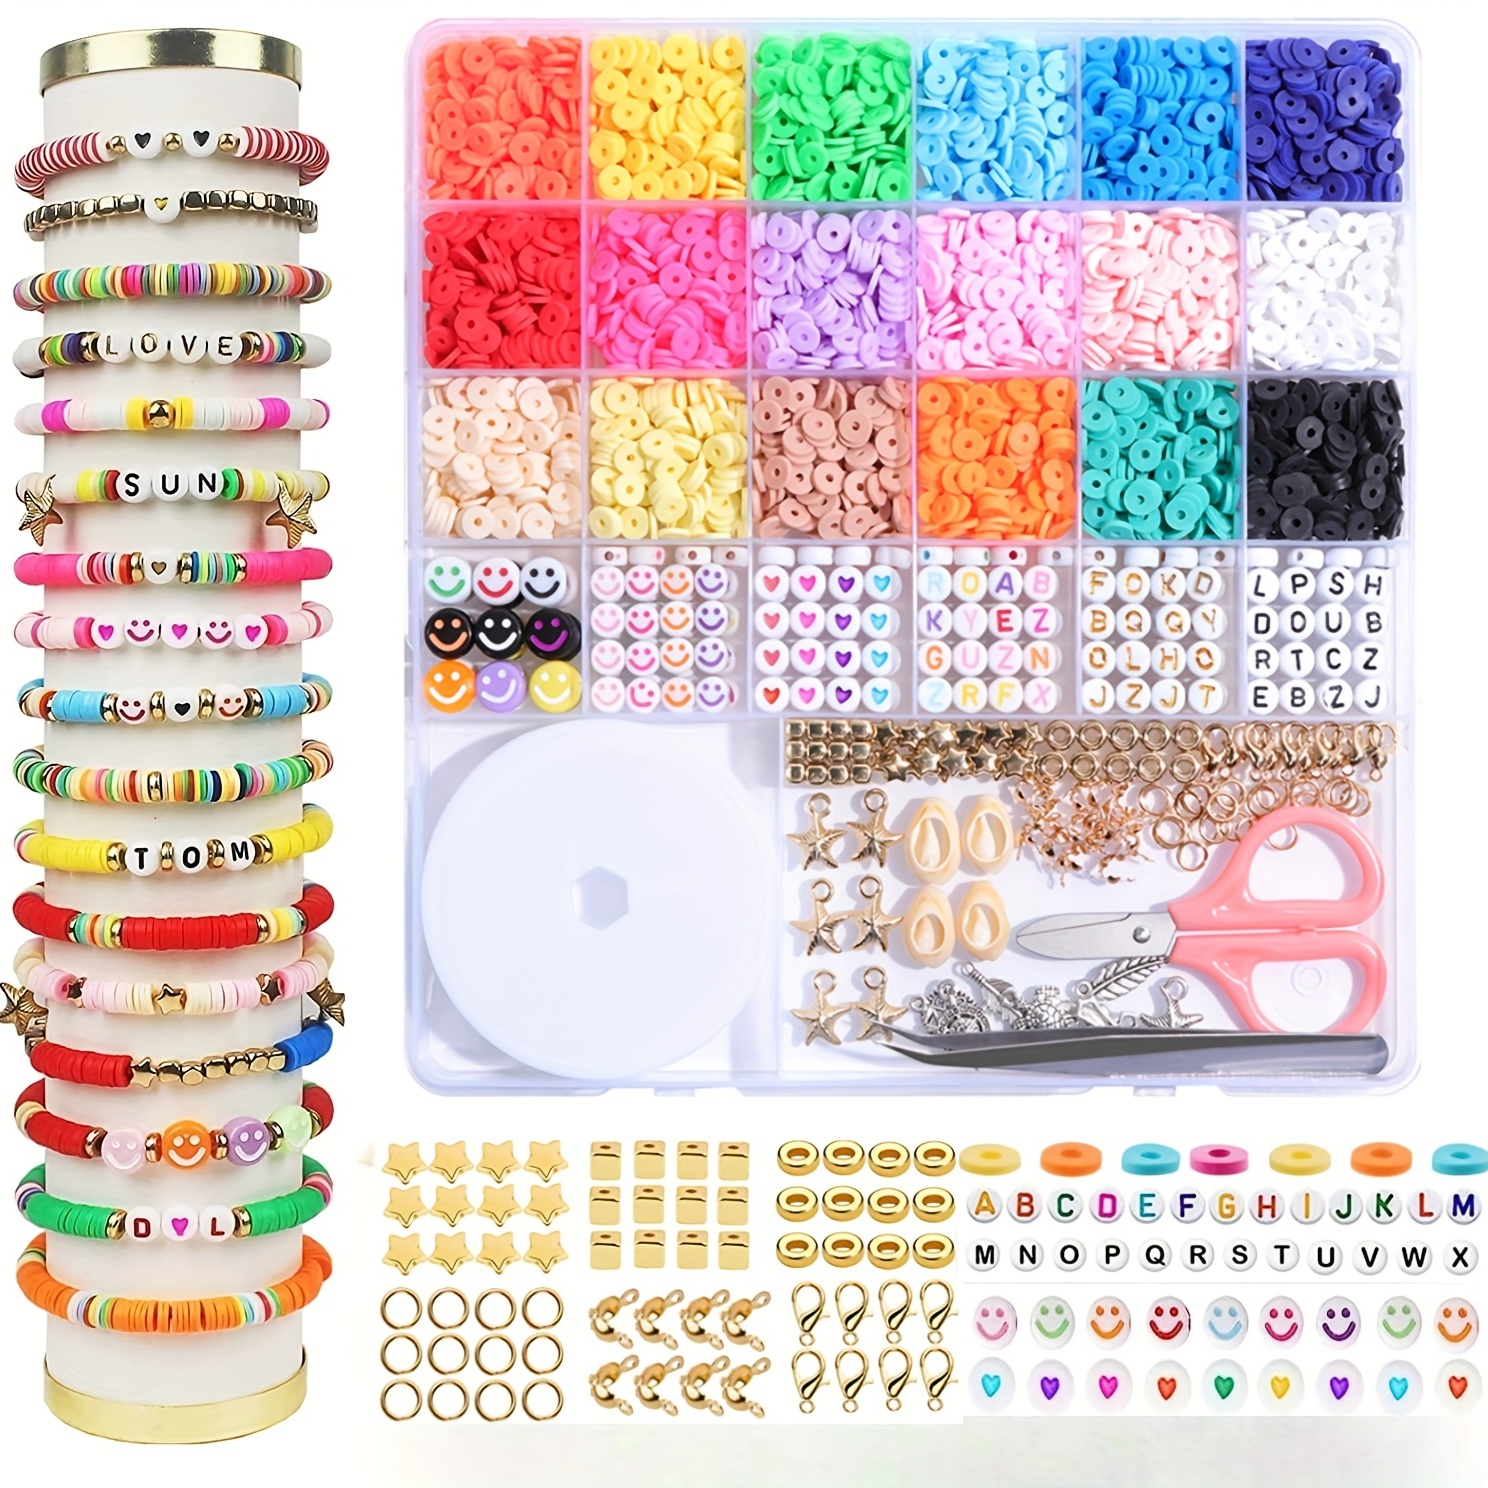 Minsoda Girls Christmas Gfits, Clay Beads Kit 6035 Pcs, Friendship Bracelet Kit, Bracelets Making Kit for Girls Gifts, Clay Bead Bracelet Kit, Beads